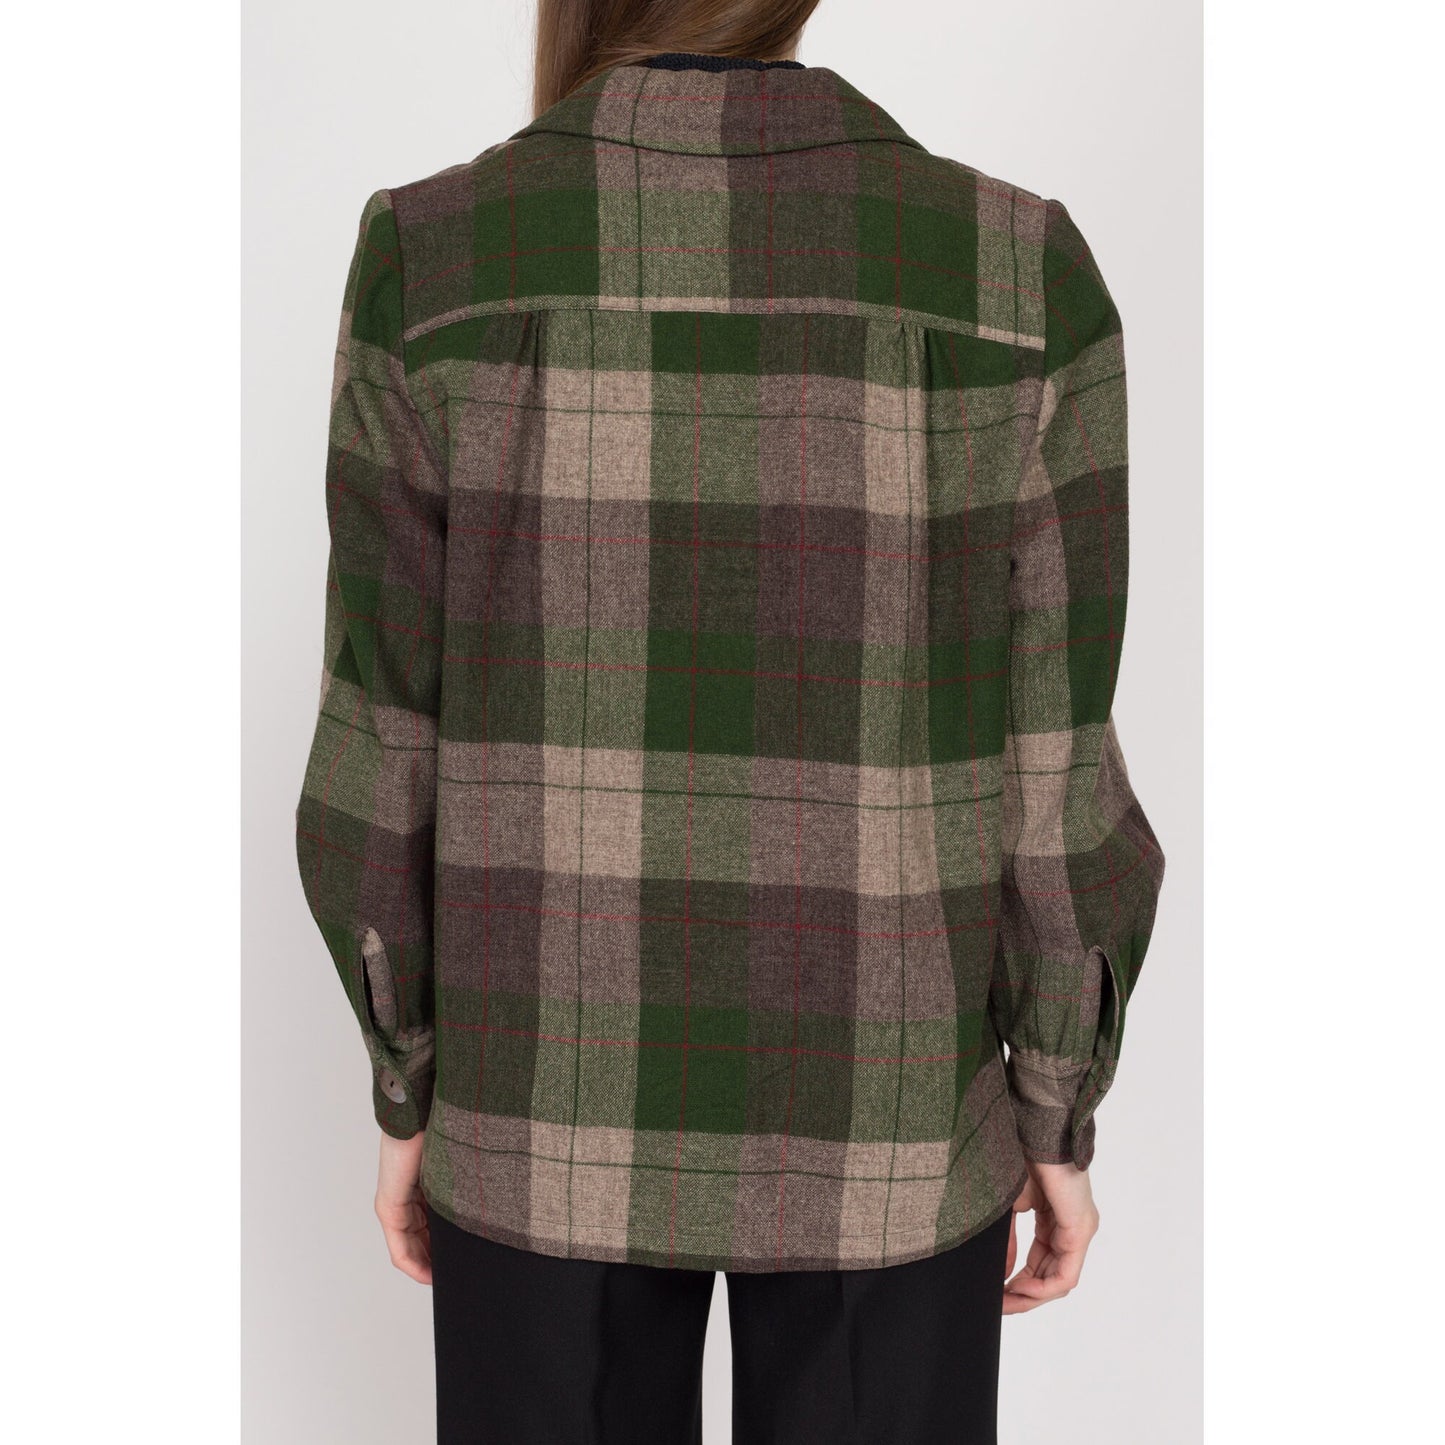 Medium 1950s Pendleton 49er Green Plaid Wool Jacket | Vintage 50s Rockabilly Button Up Pocket Overshirt